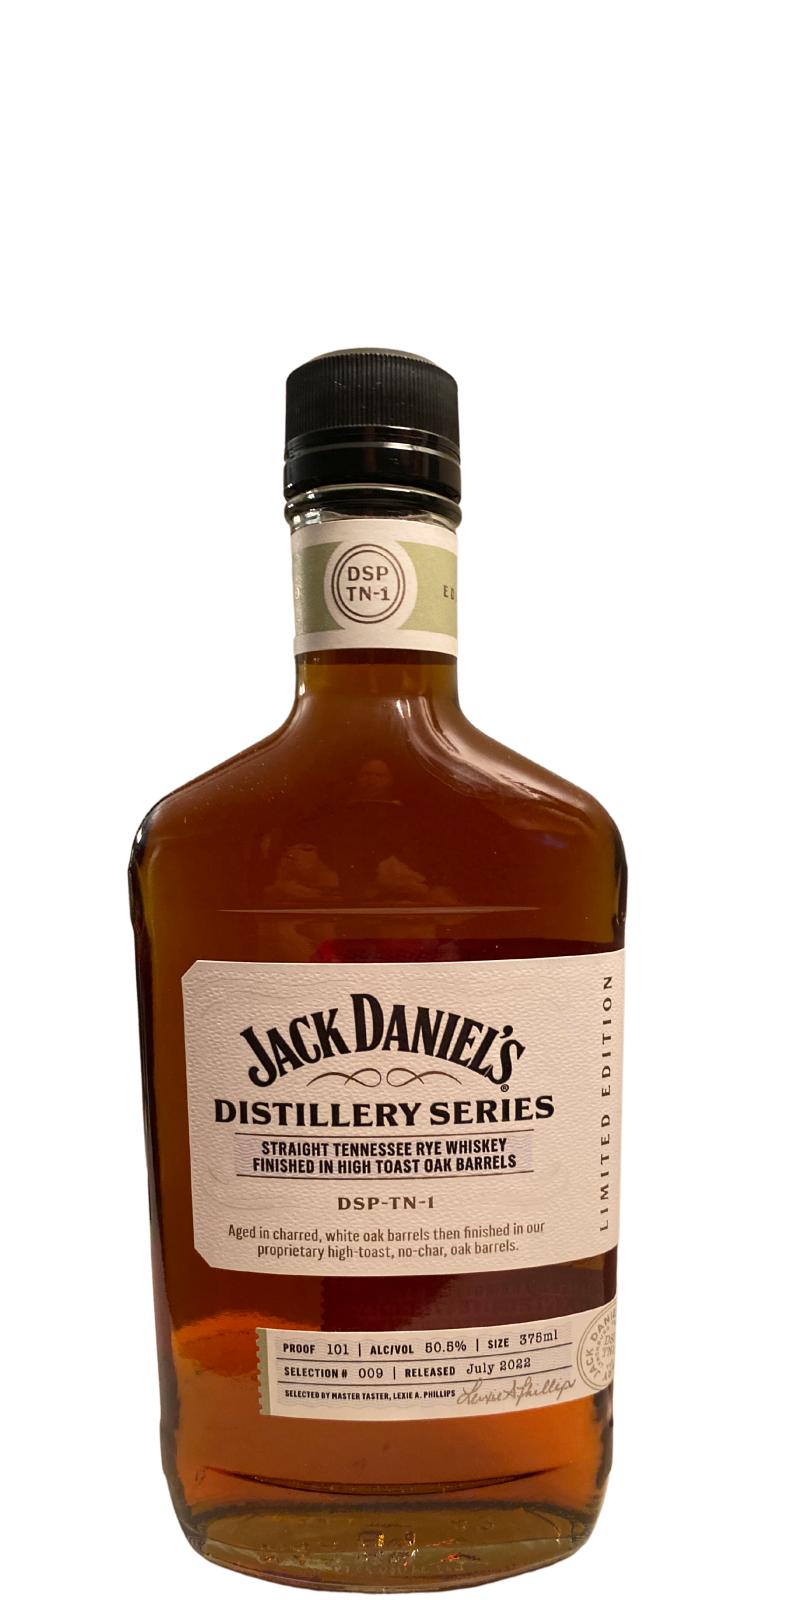 Jack Daniel's Distillery Series Selection 009